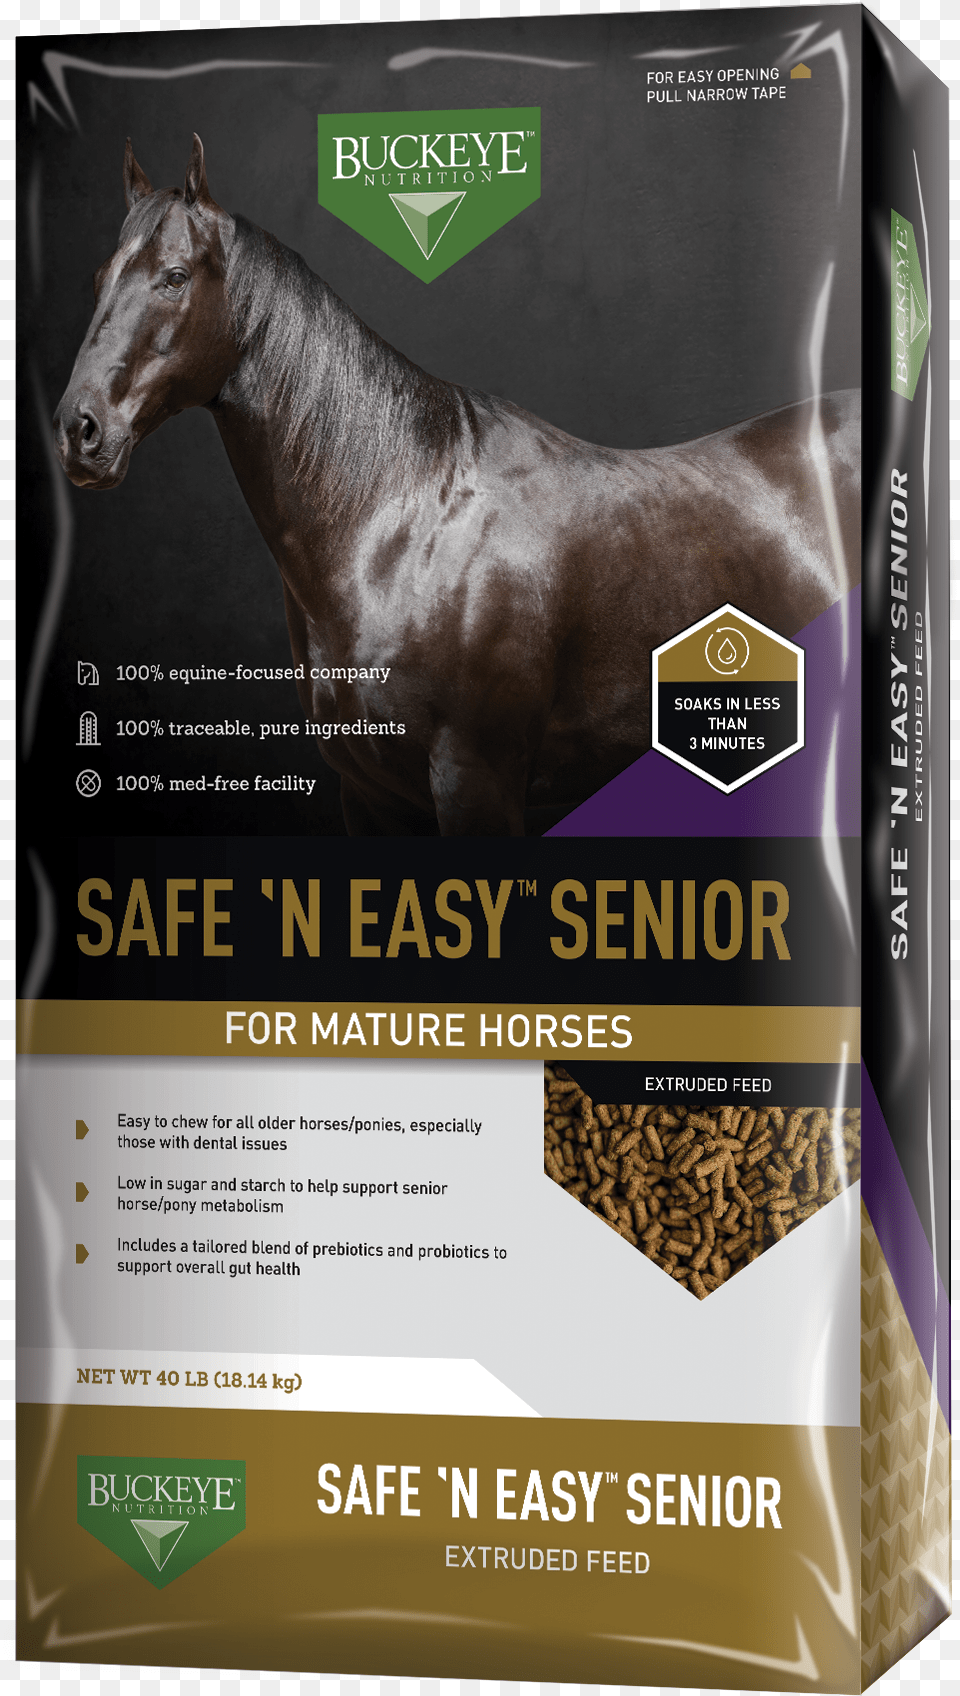 Buckeye Senior Balancer Feed, Advertisement, Poster, Animal, Horse Png Image